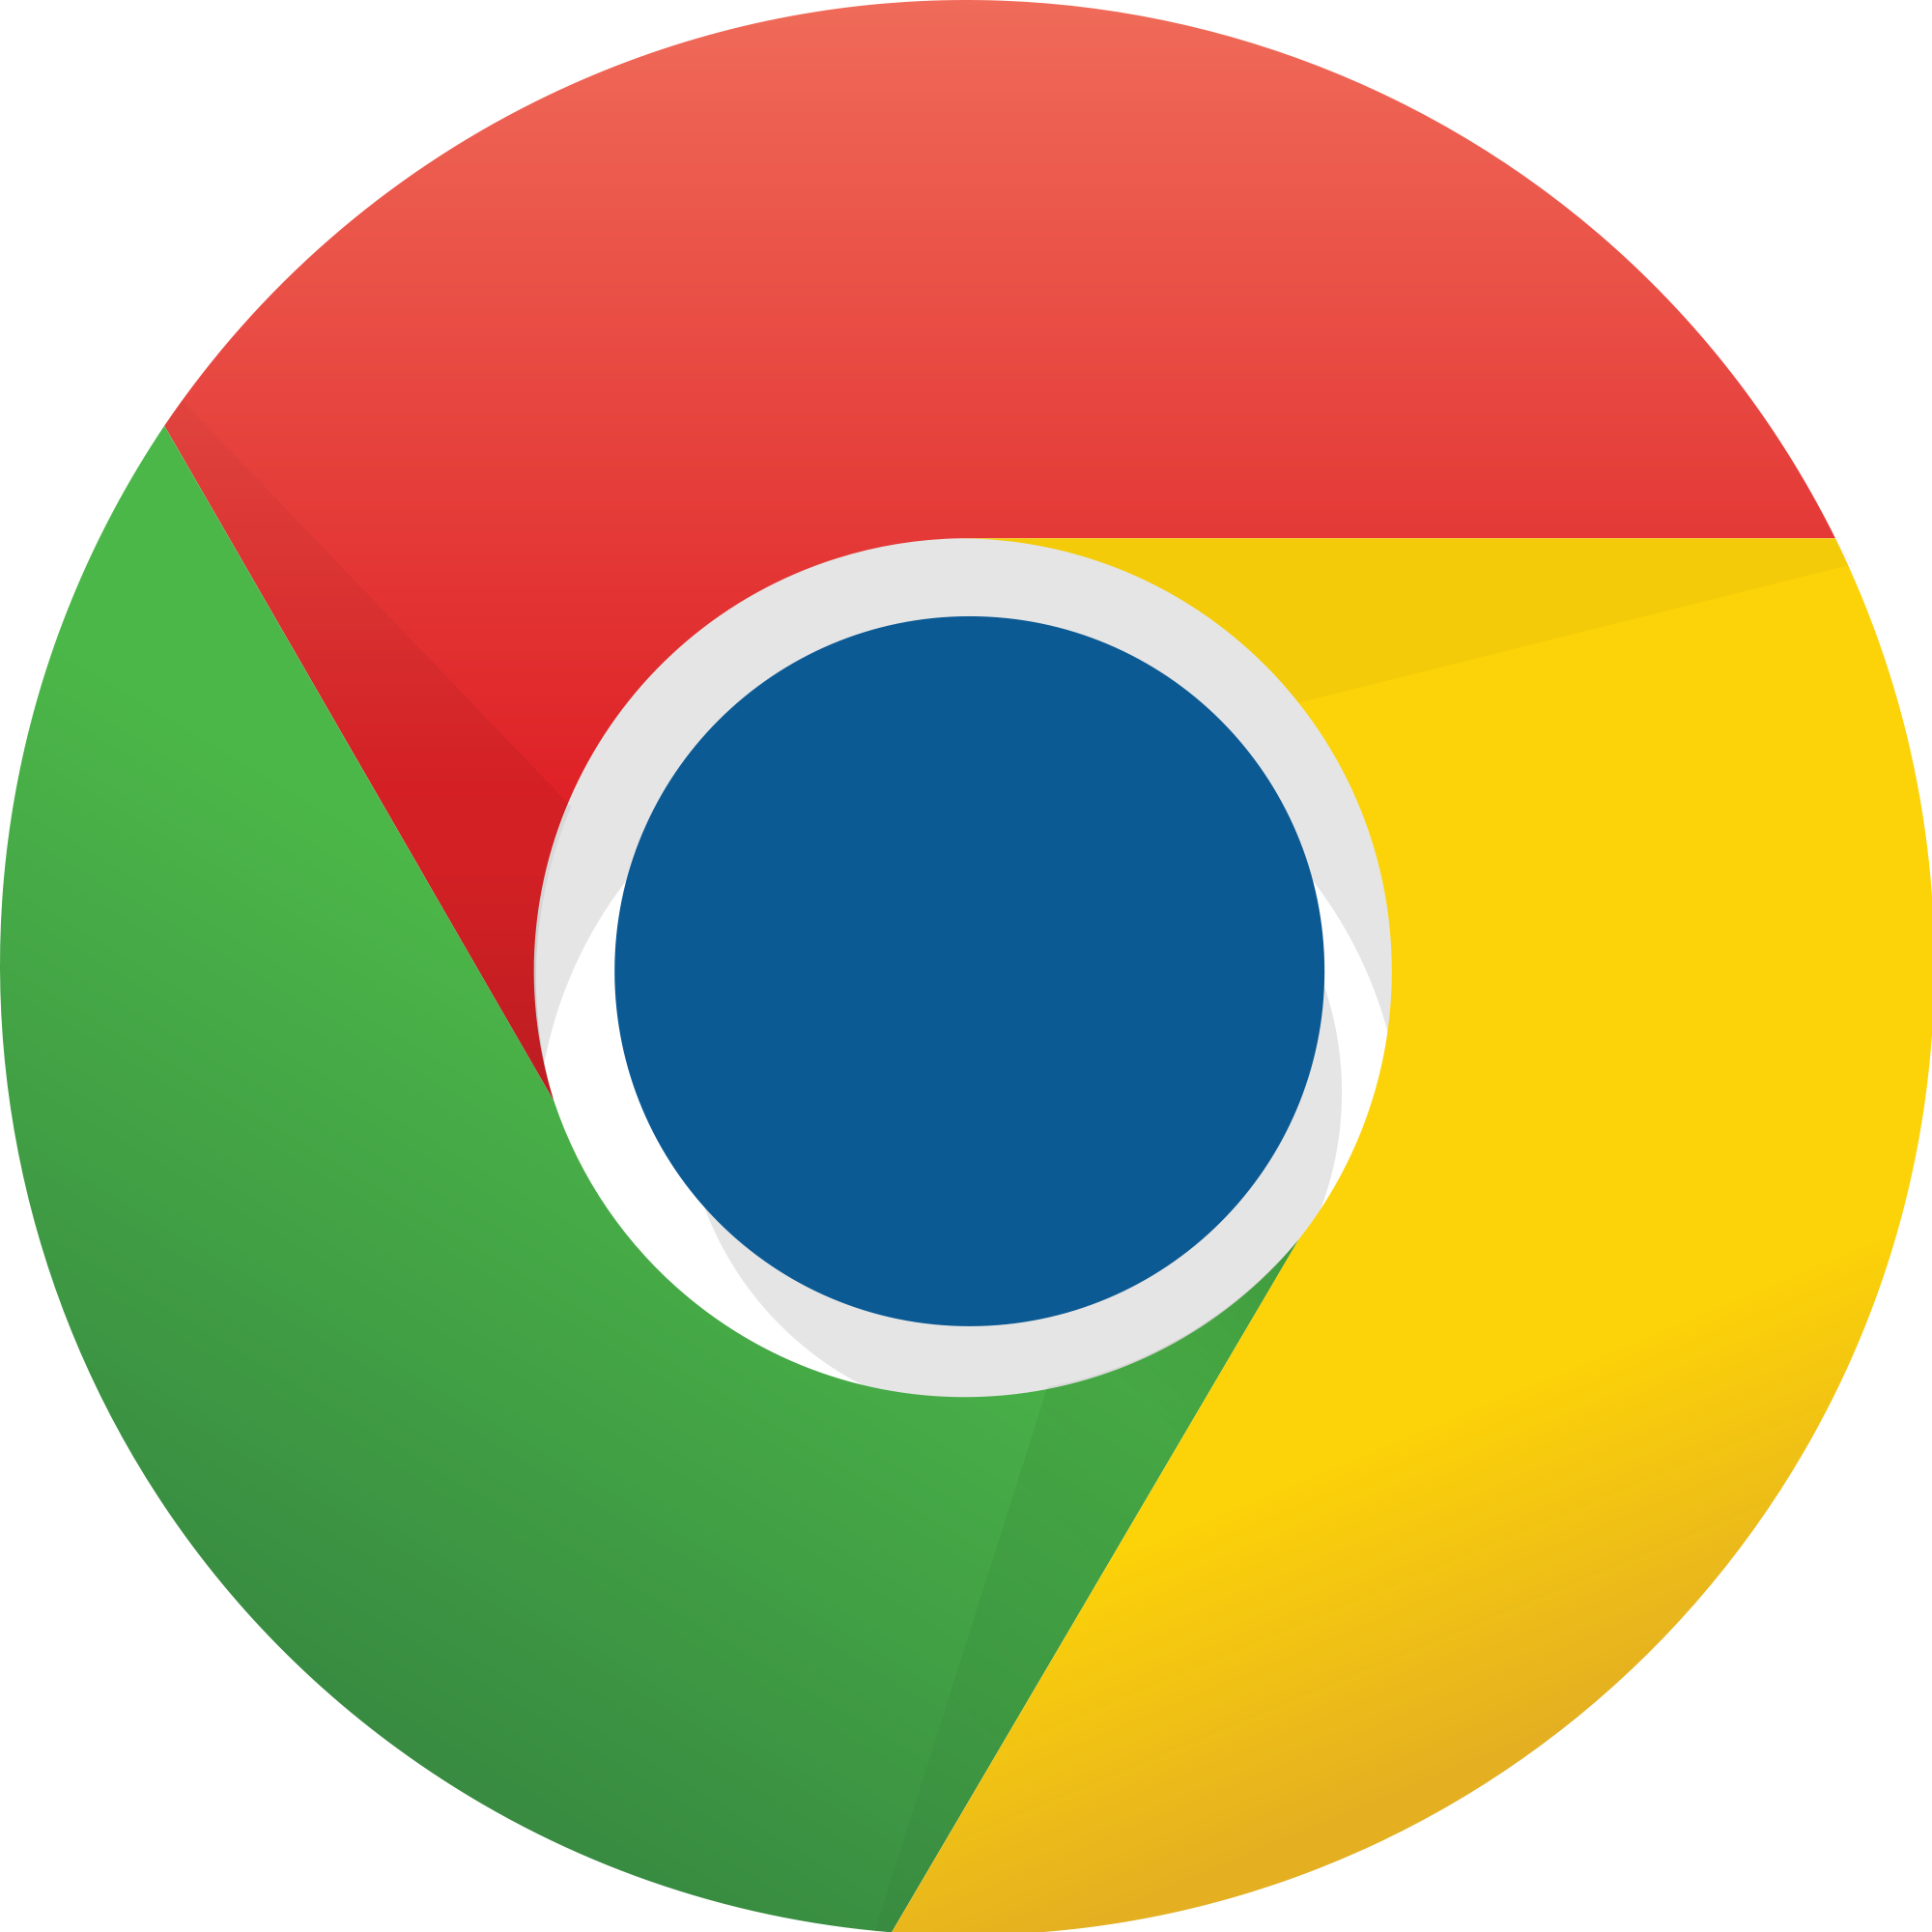 Blue Web Google Extension Chrome App Icon PNG Image